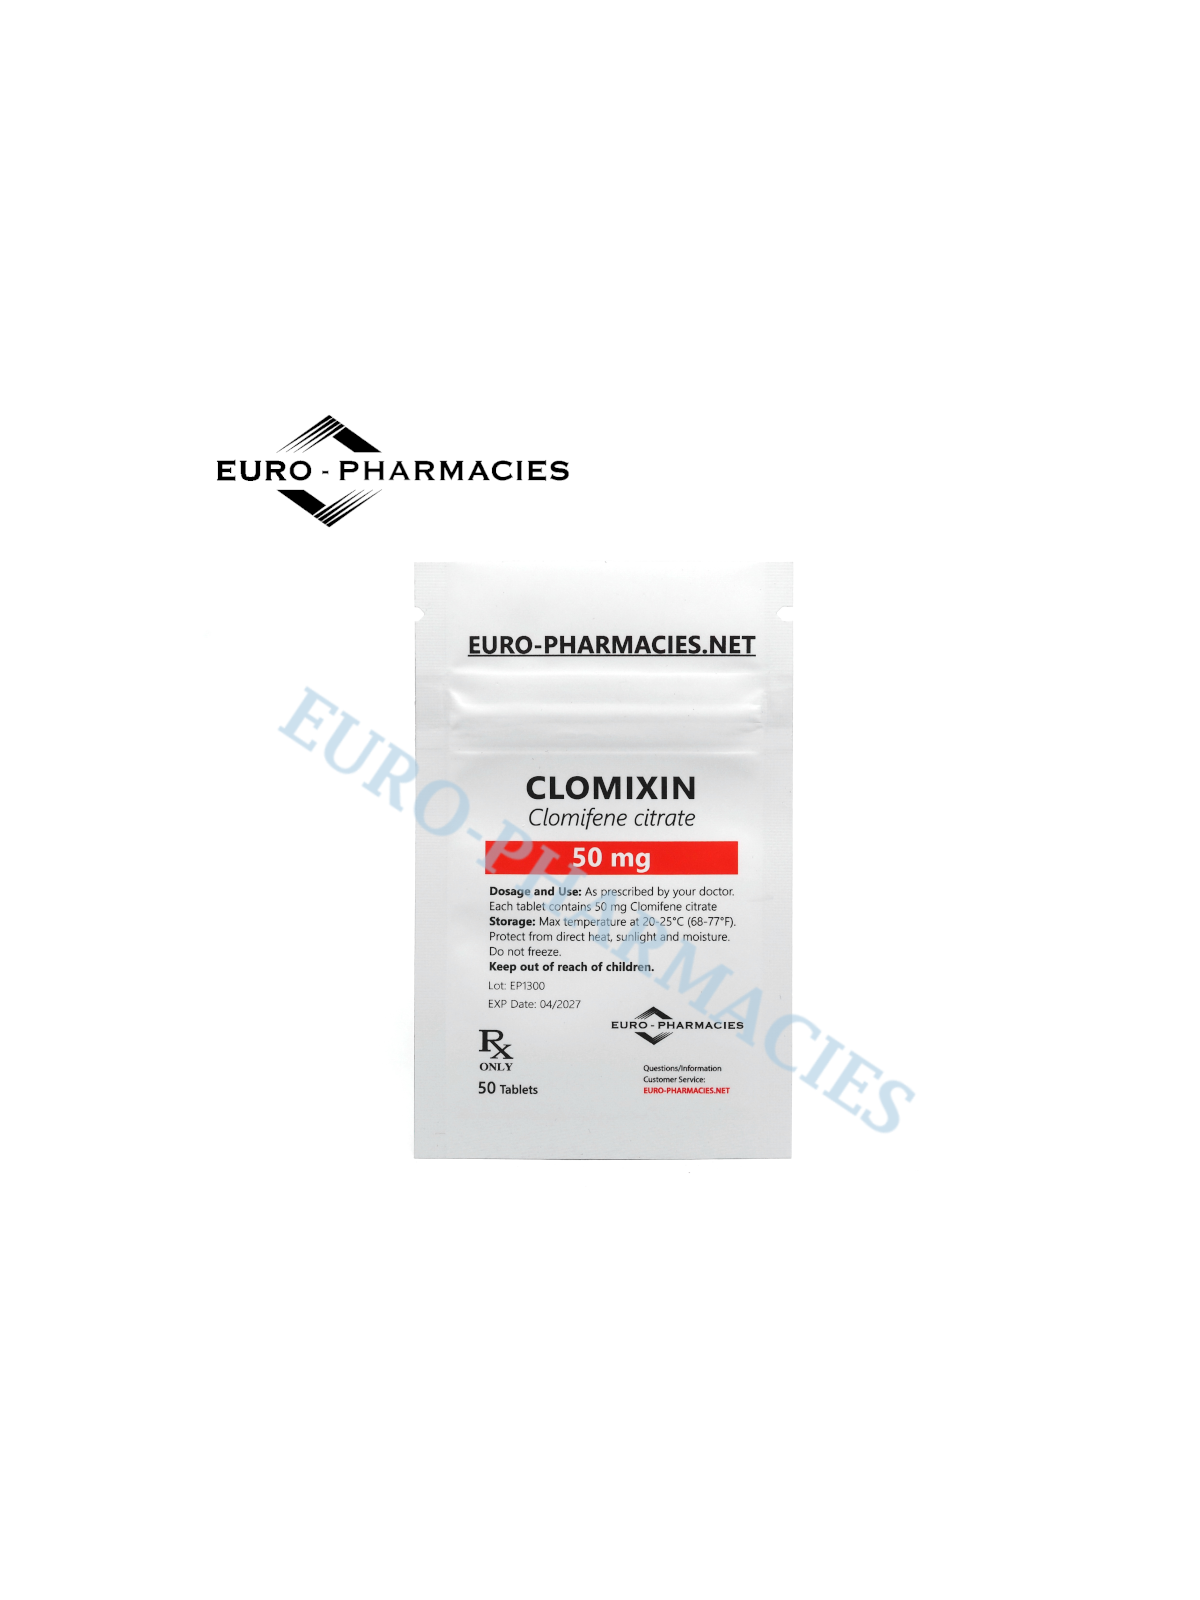 Clomixin (Clomid ) - 50mg/tab, 50 pills/bag - Euro-Pharmacies - USA